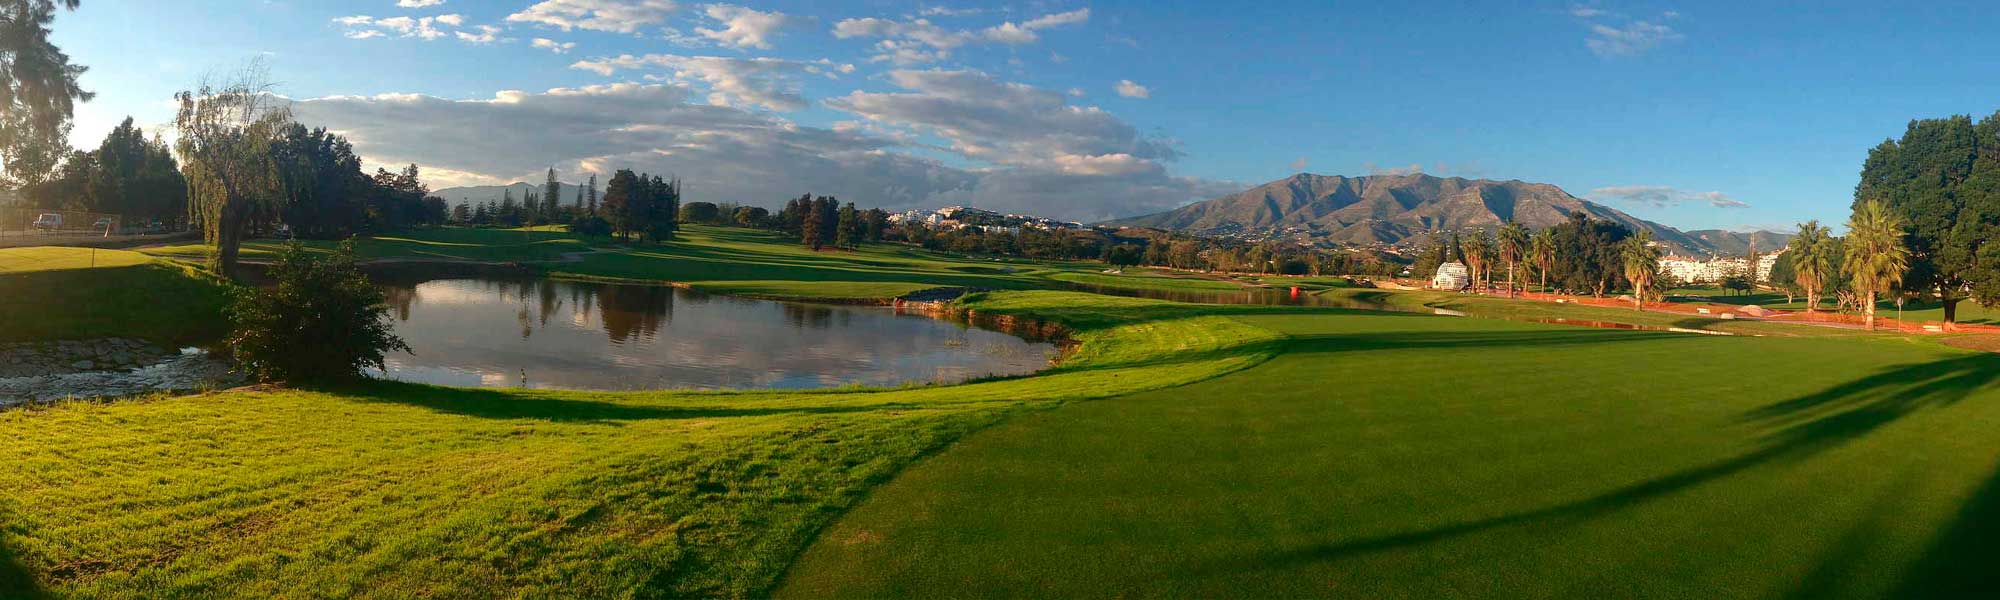 Mijas Golf Club - Green fee rates - Golf Holidays - Costa del Sol Spain